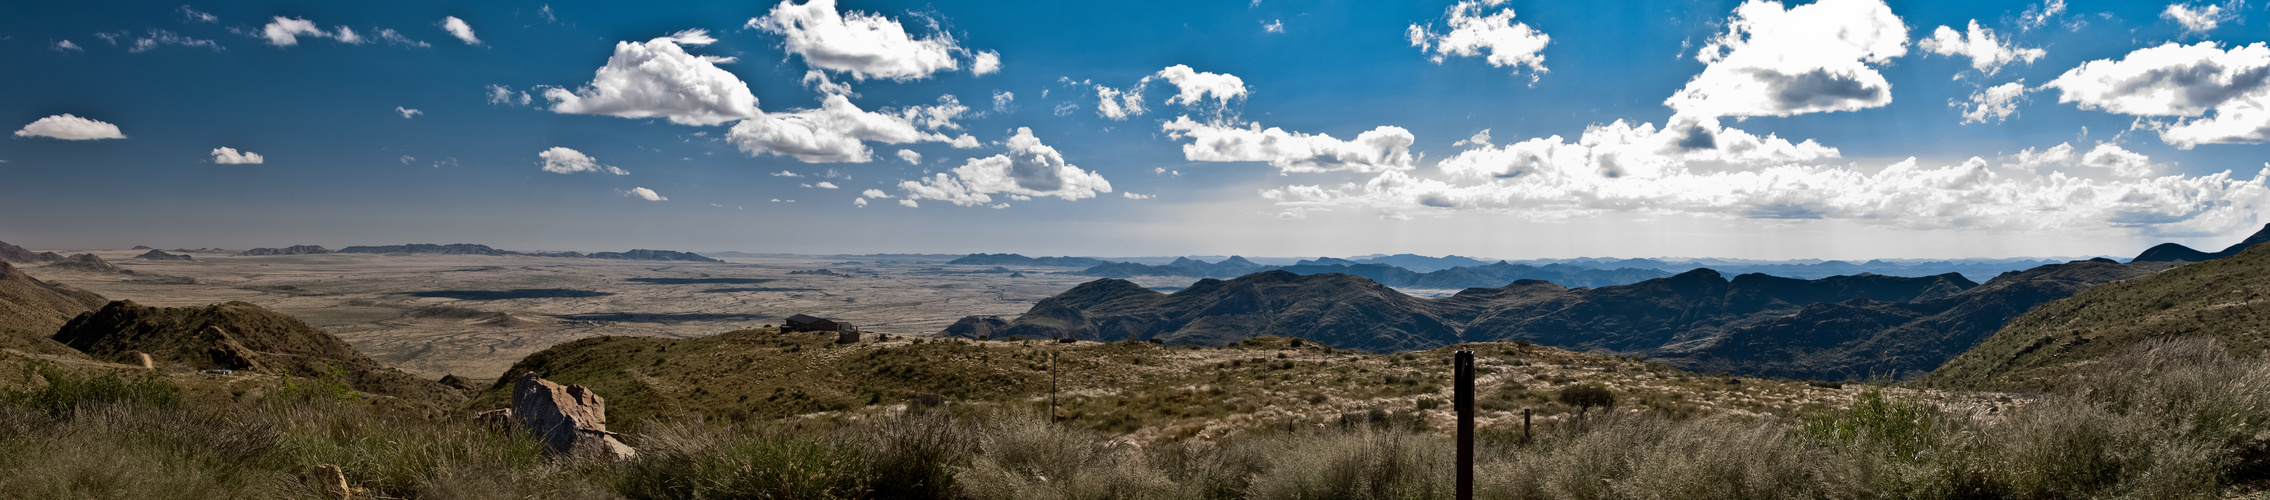 Panorama am Spreetshogtepass in Namibia